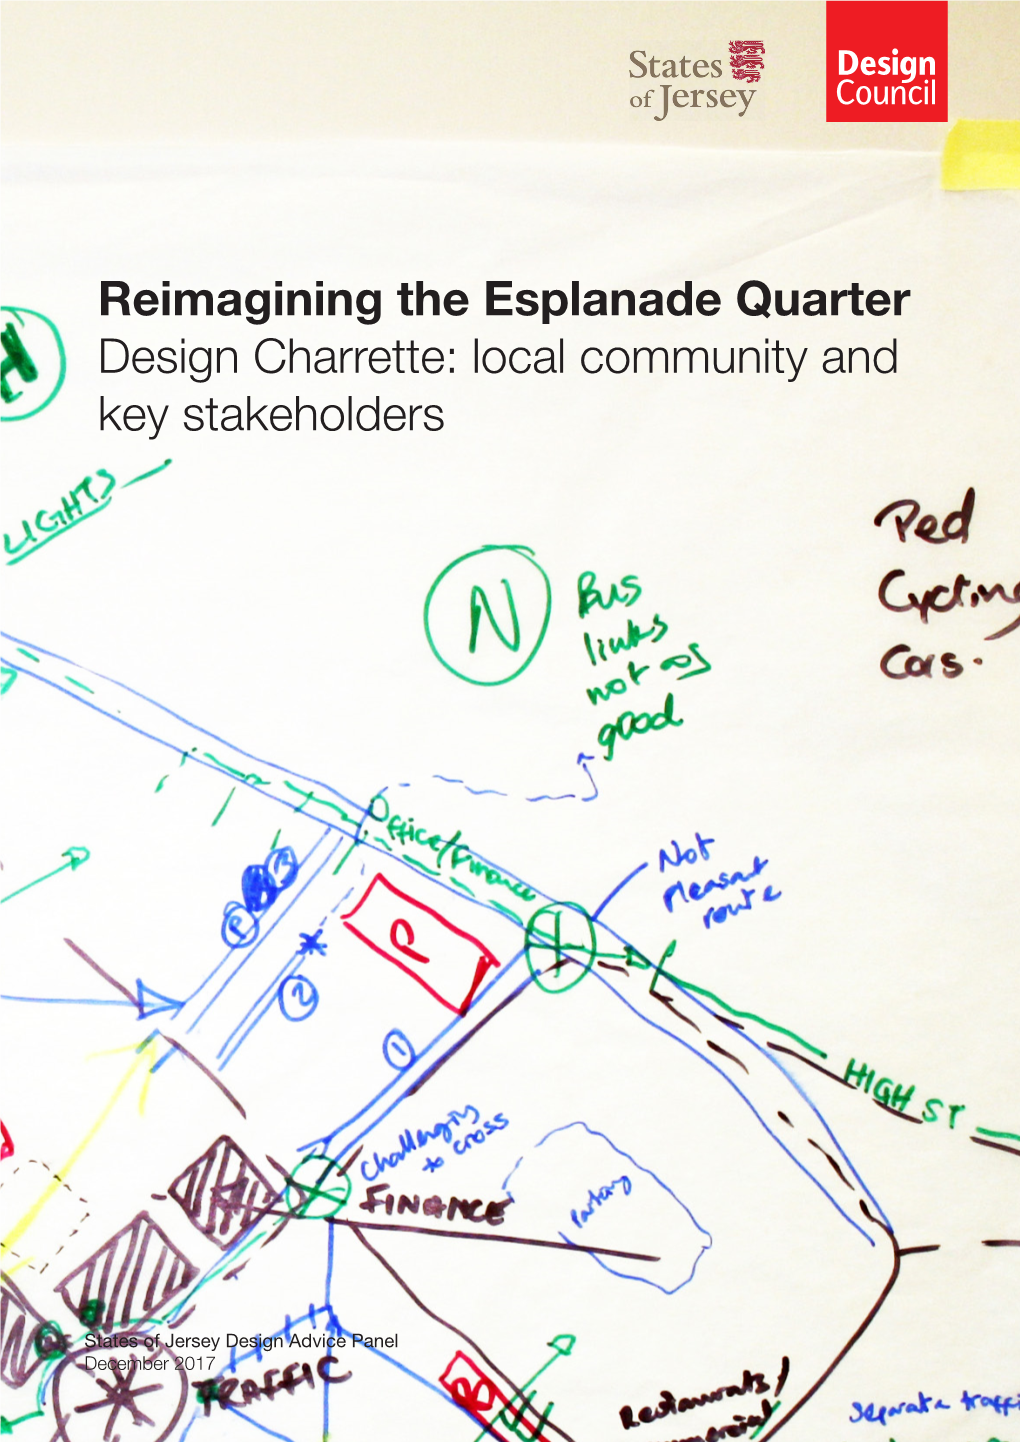 Reimagining the Esplanade Quarter Design Charrette: Local Community and Key Stakeholders